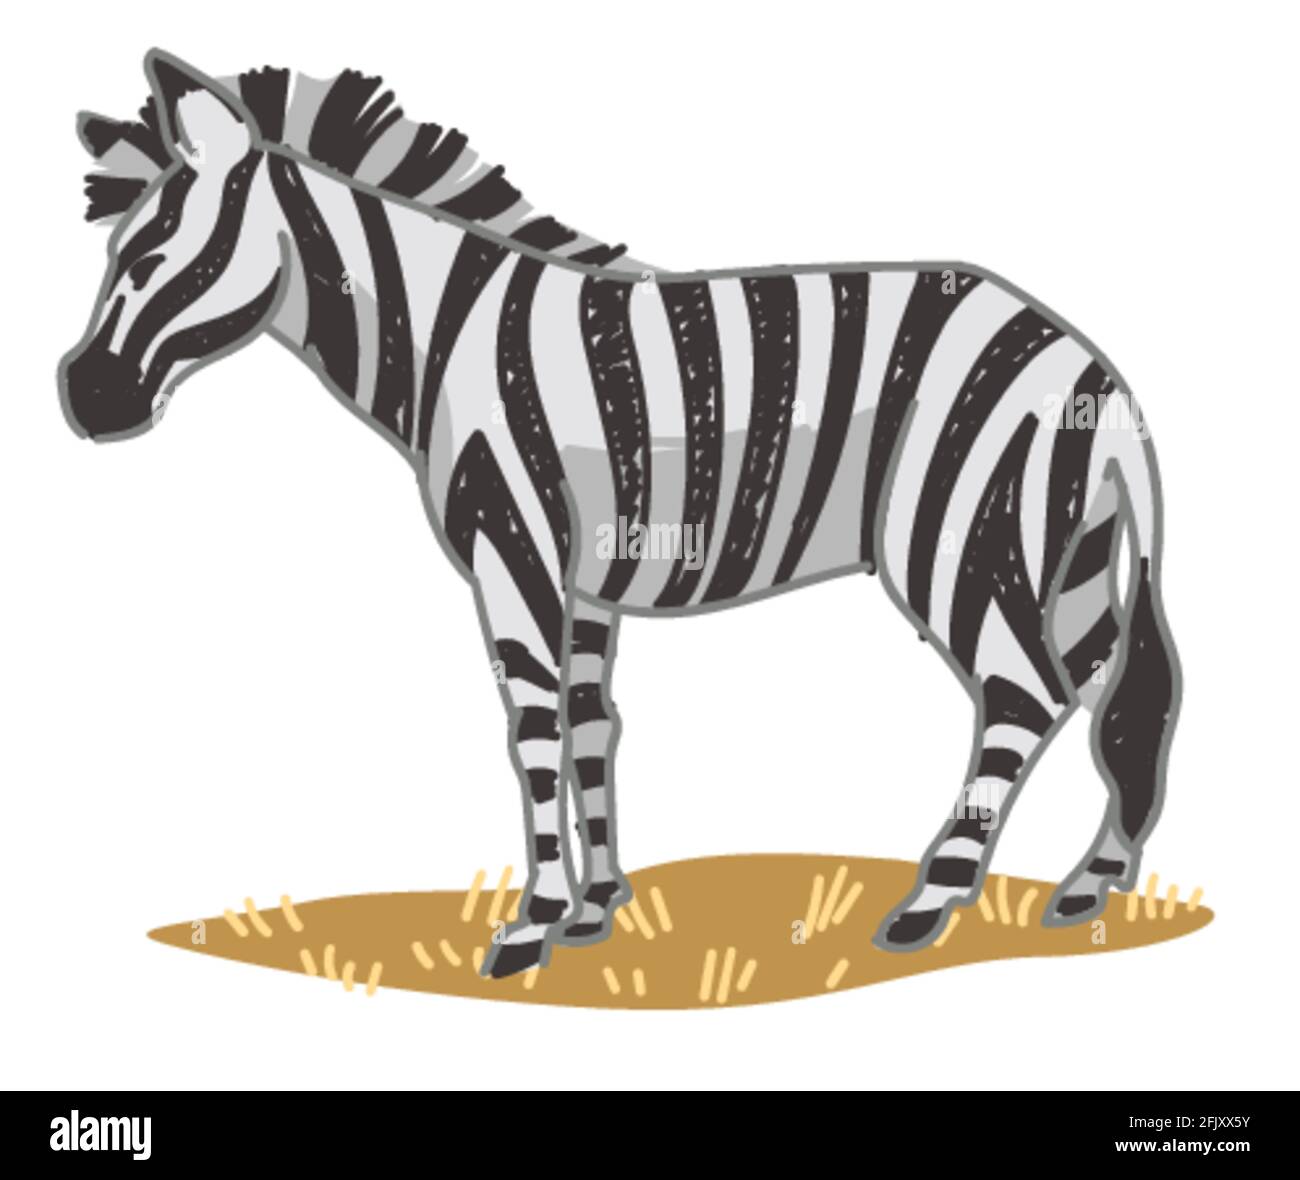 Zebra equine animal with stripes on skin vector Stock Vector